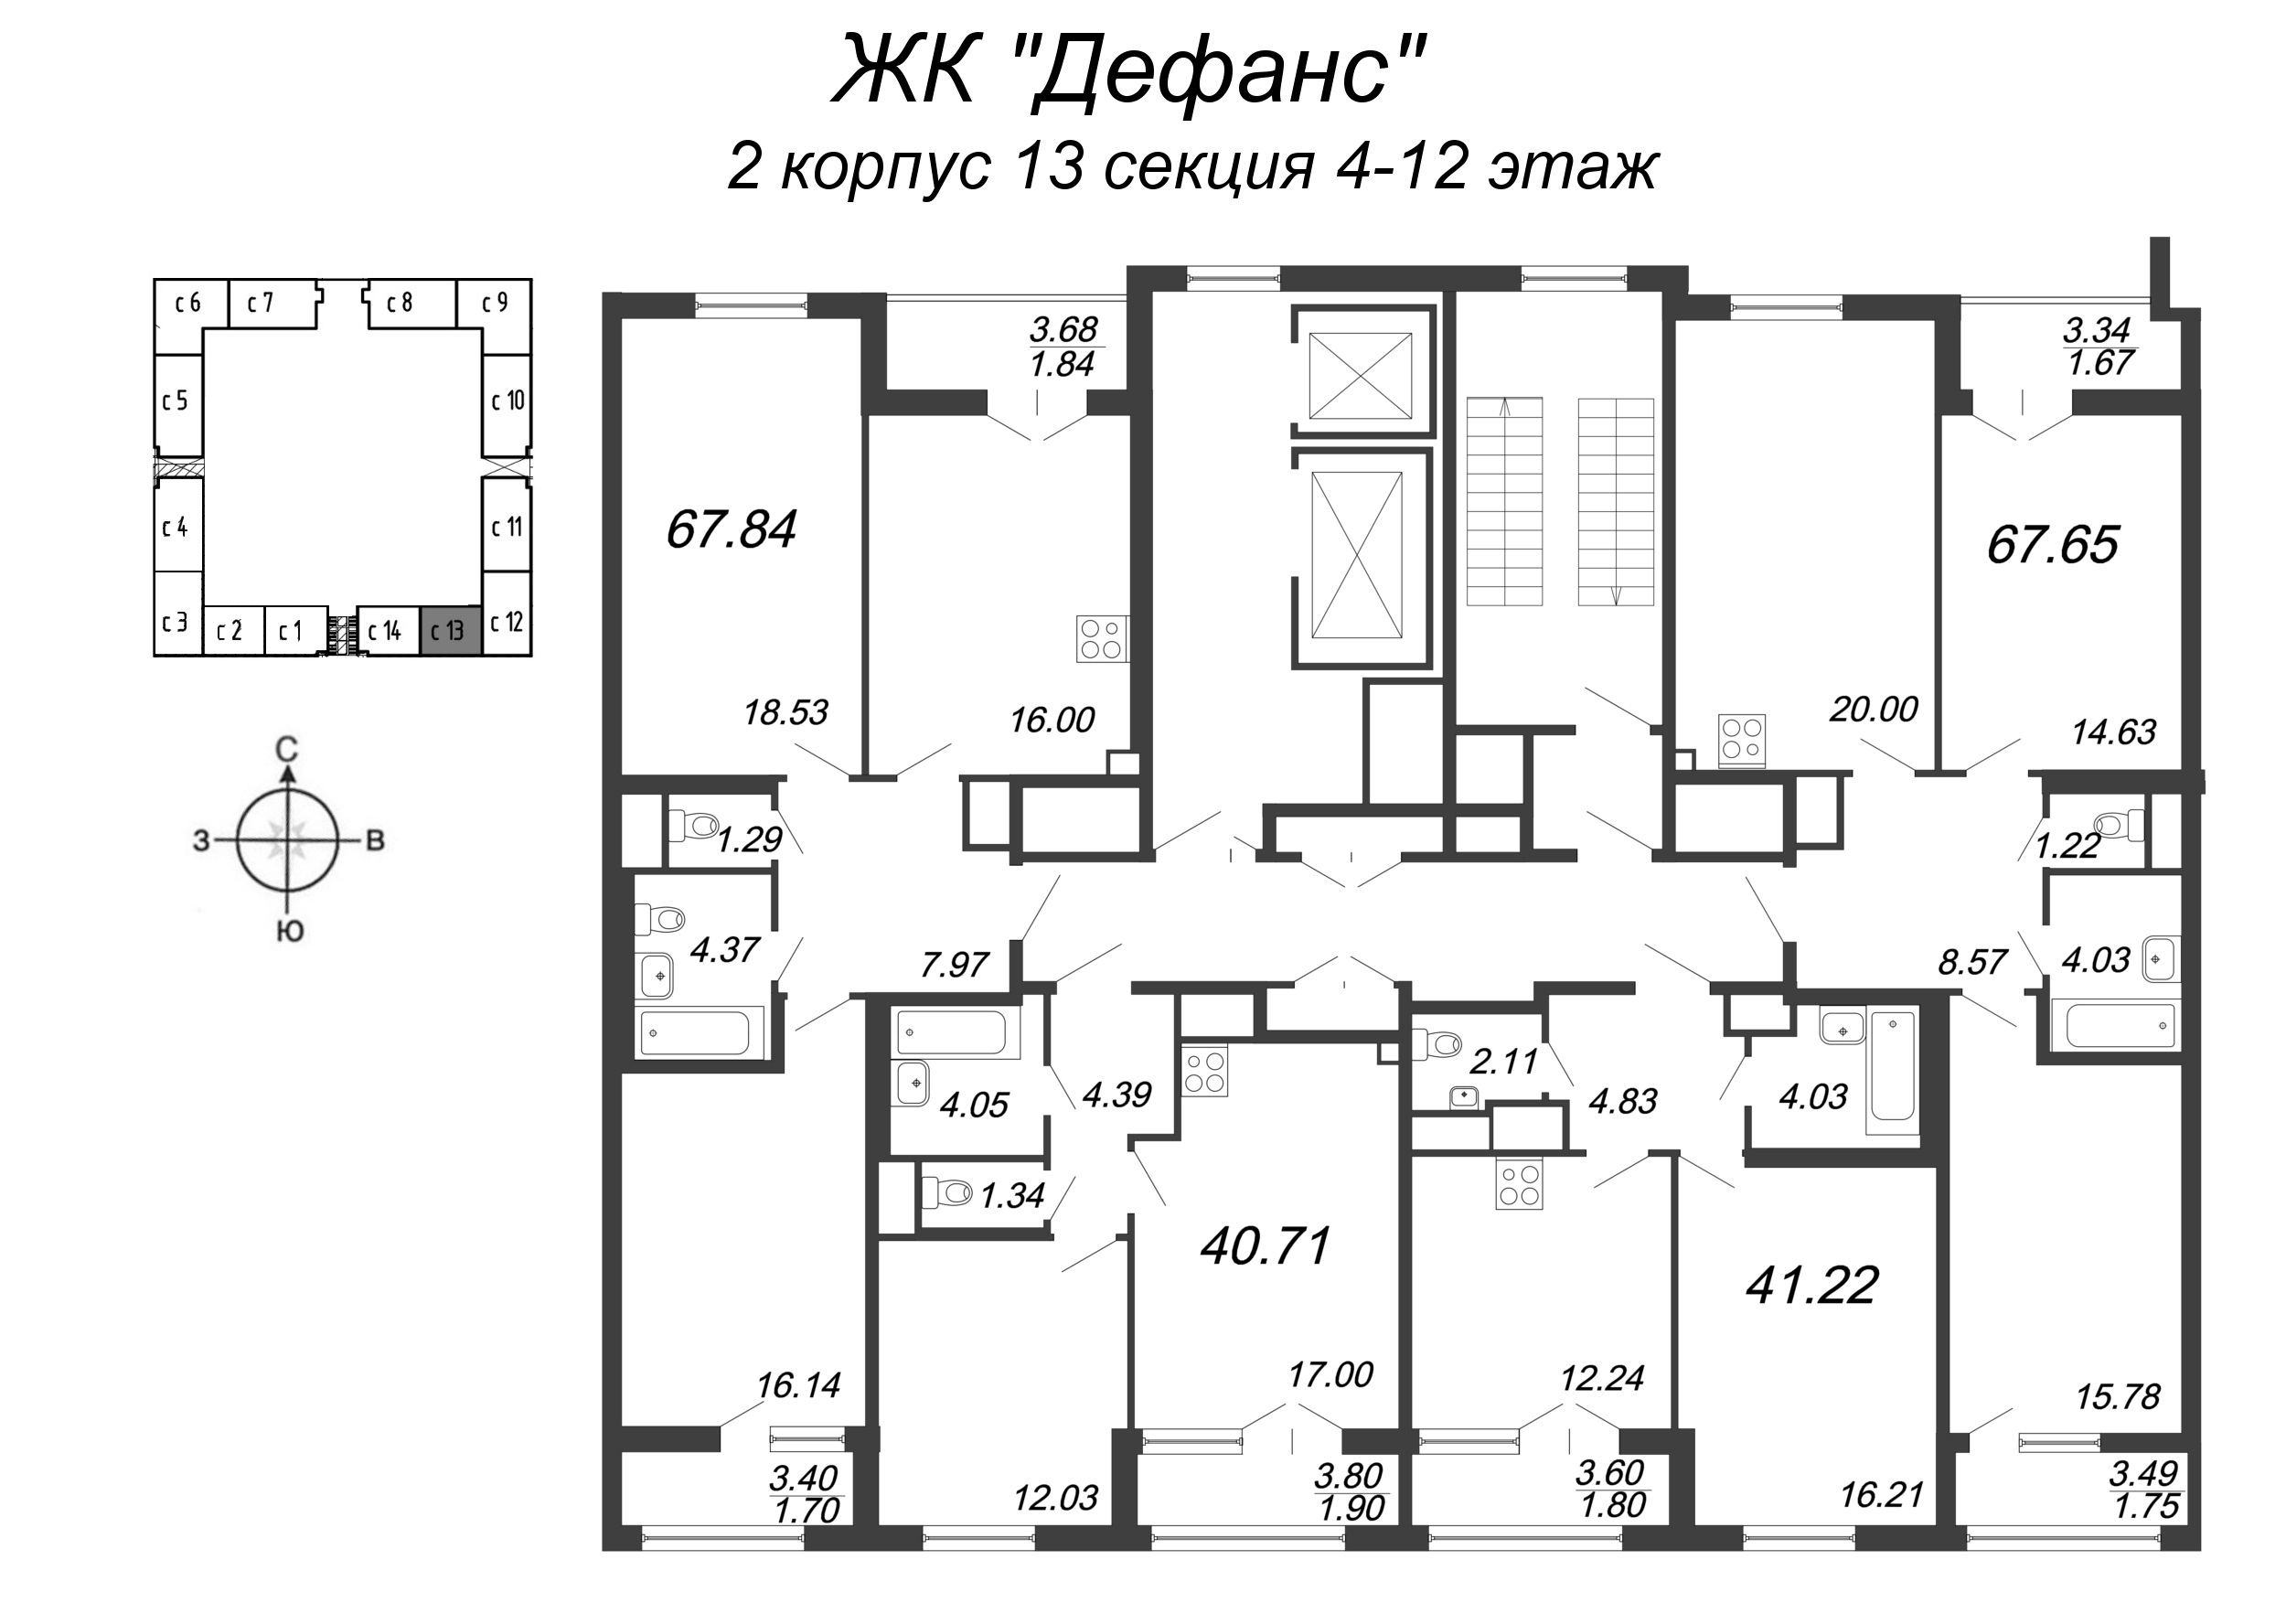 3-комнатная (Евро) квартира, 67.65 м² - планировка этажа